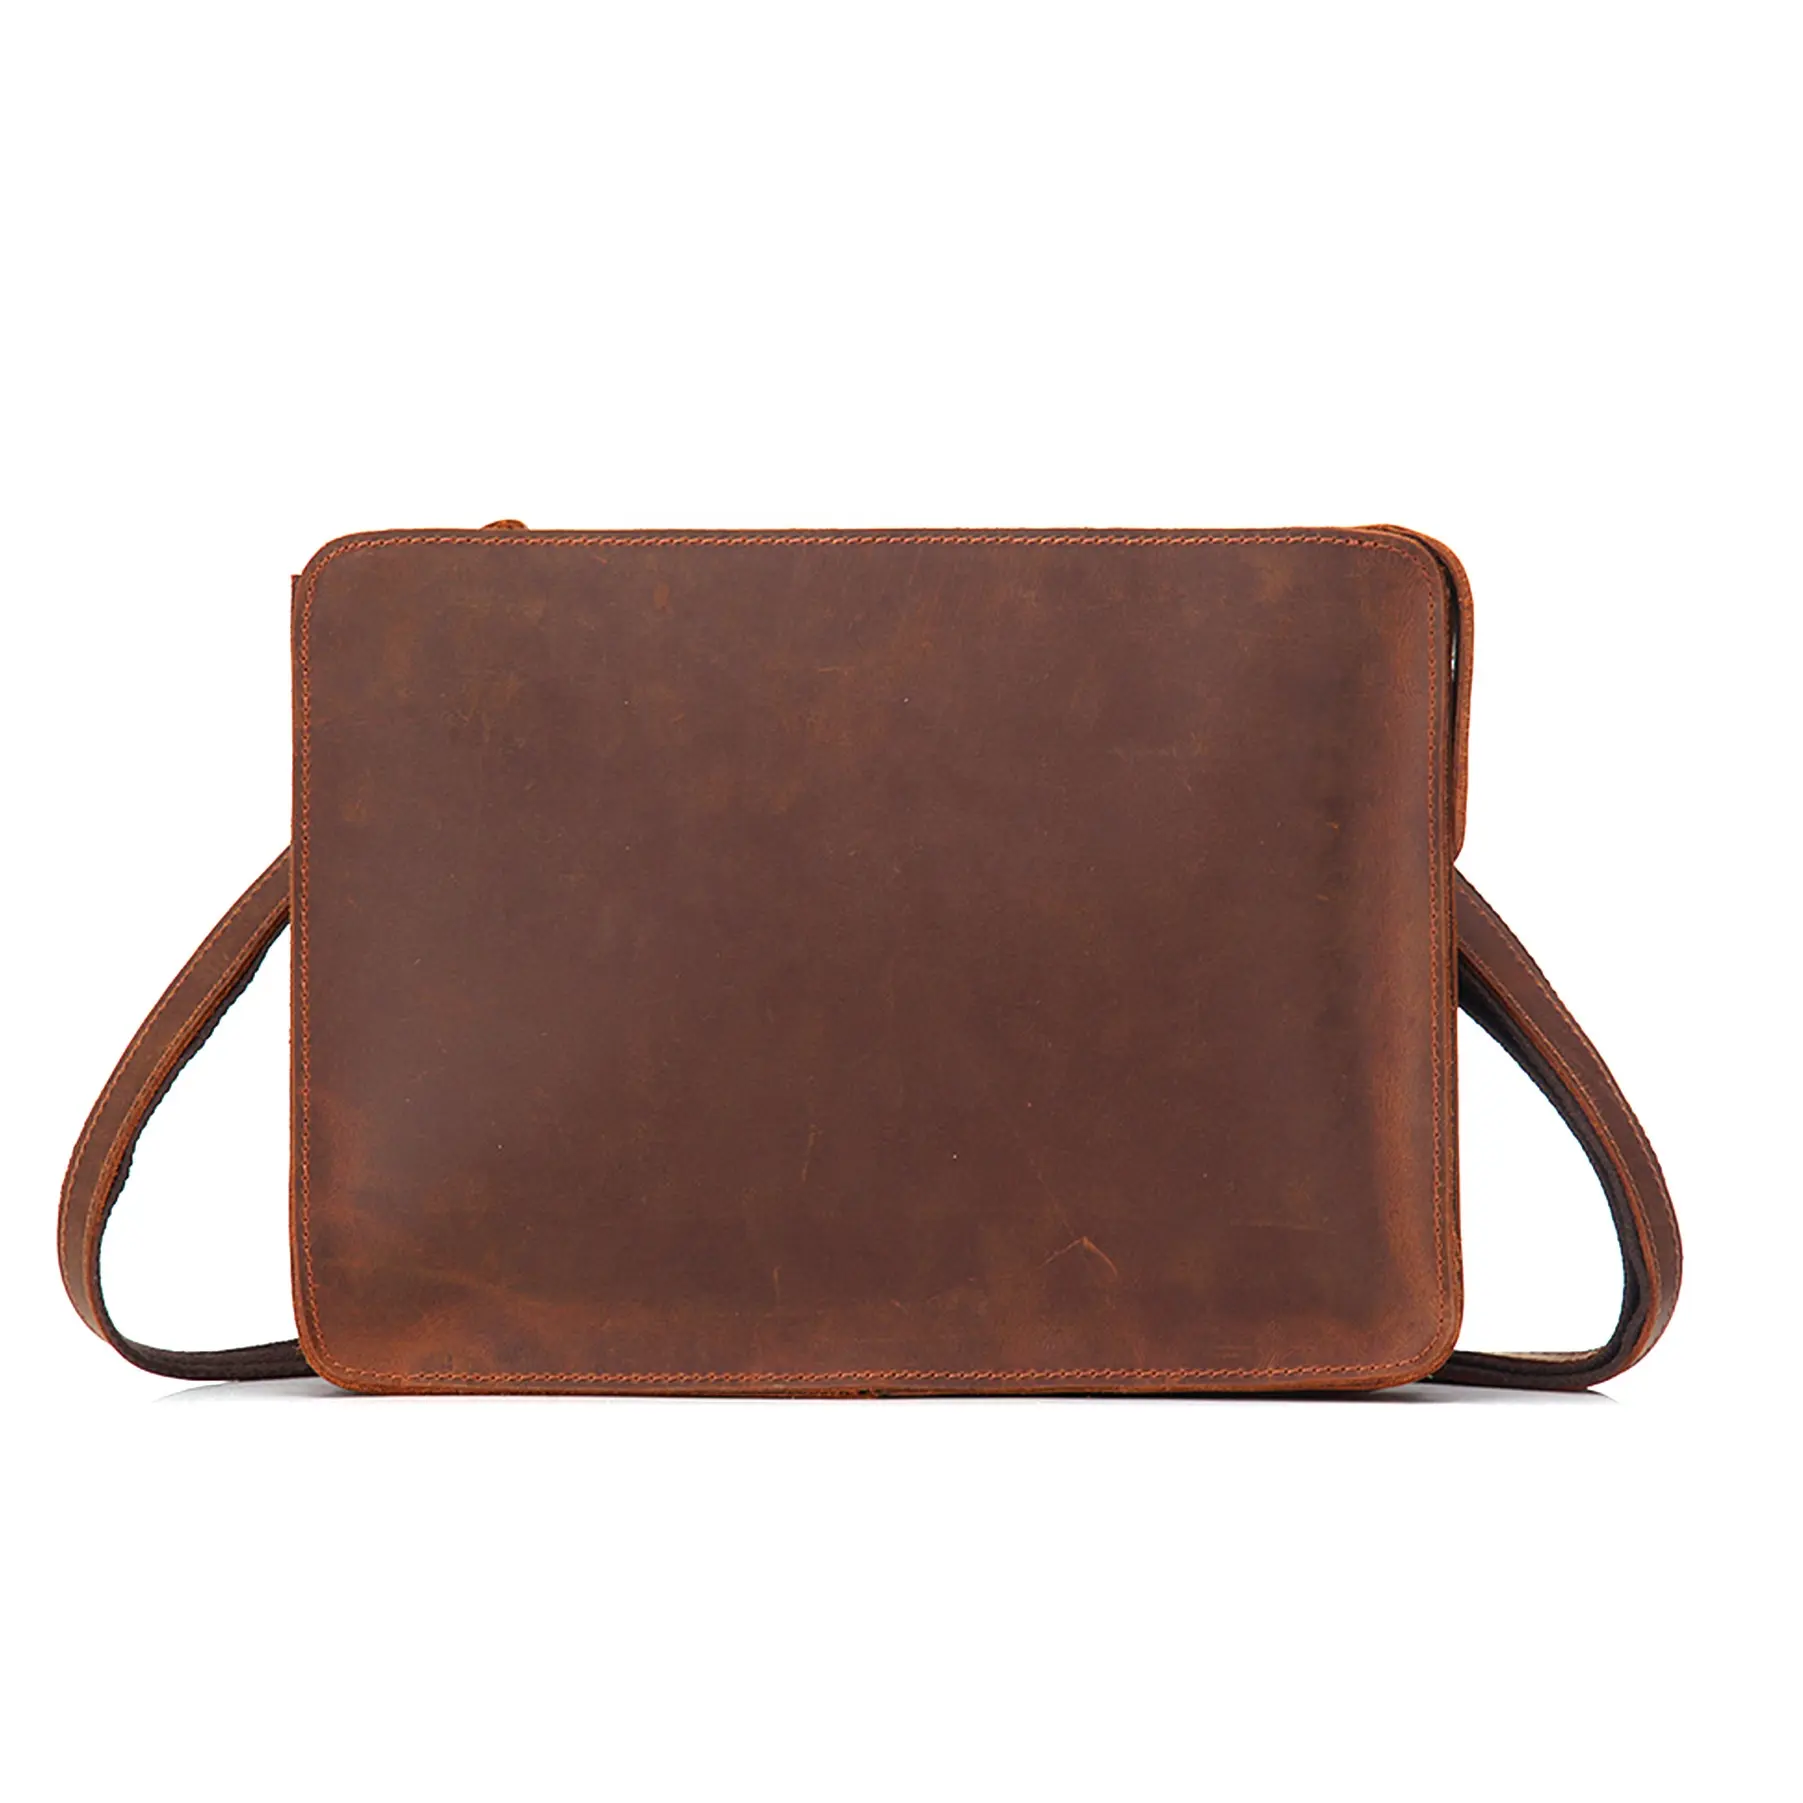 Men Genuine Leather Purse Wallet Bag Male Purse Leather Large Capacity Design Travel Tablet Case Organiser